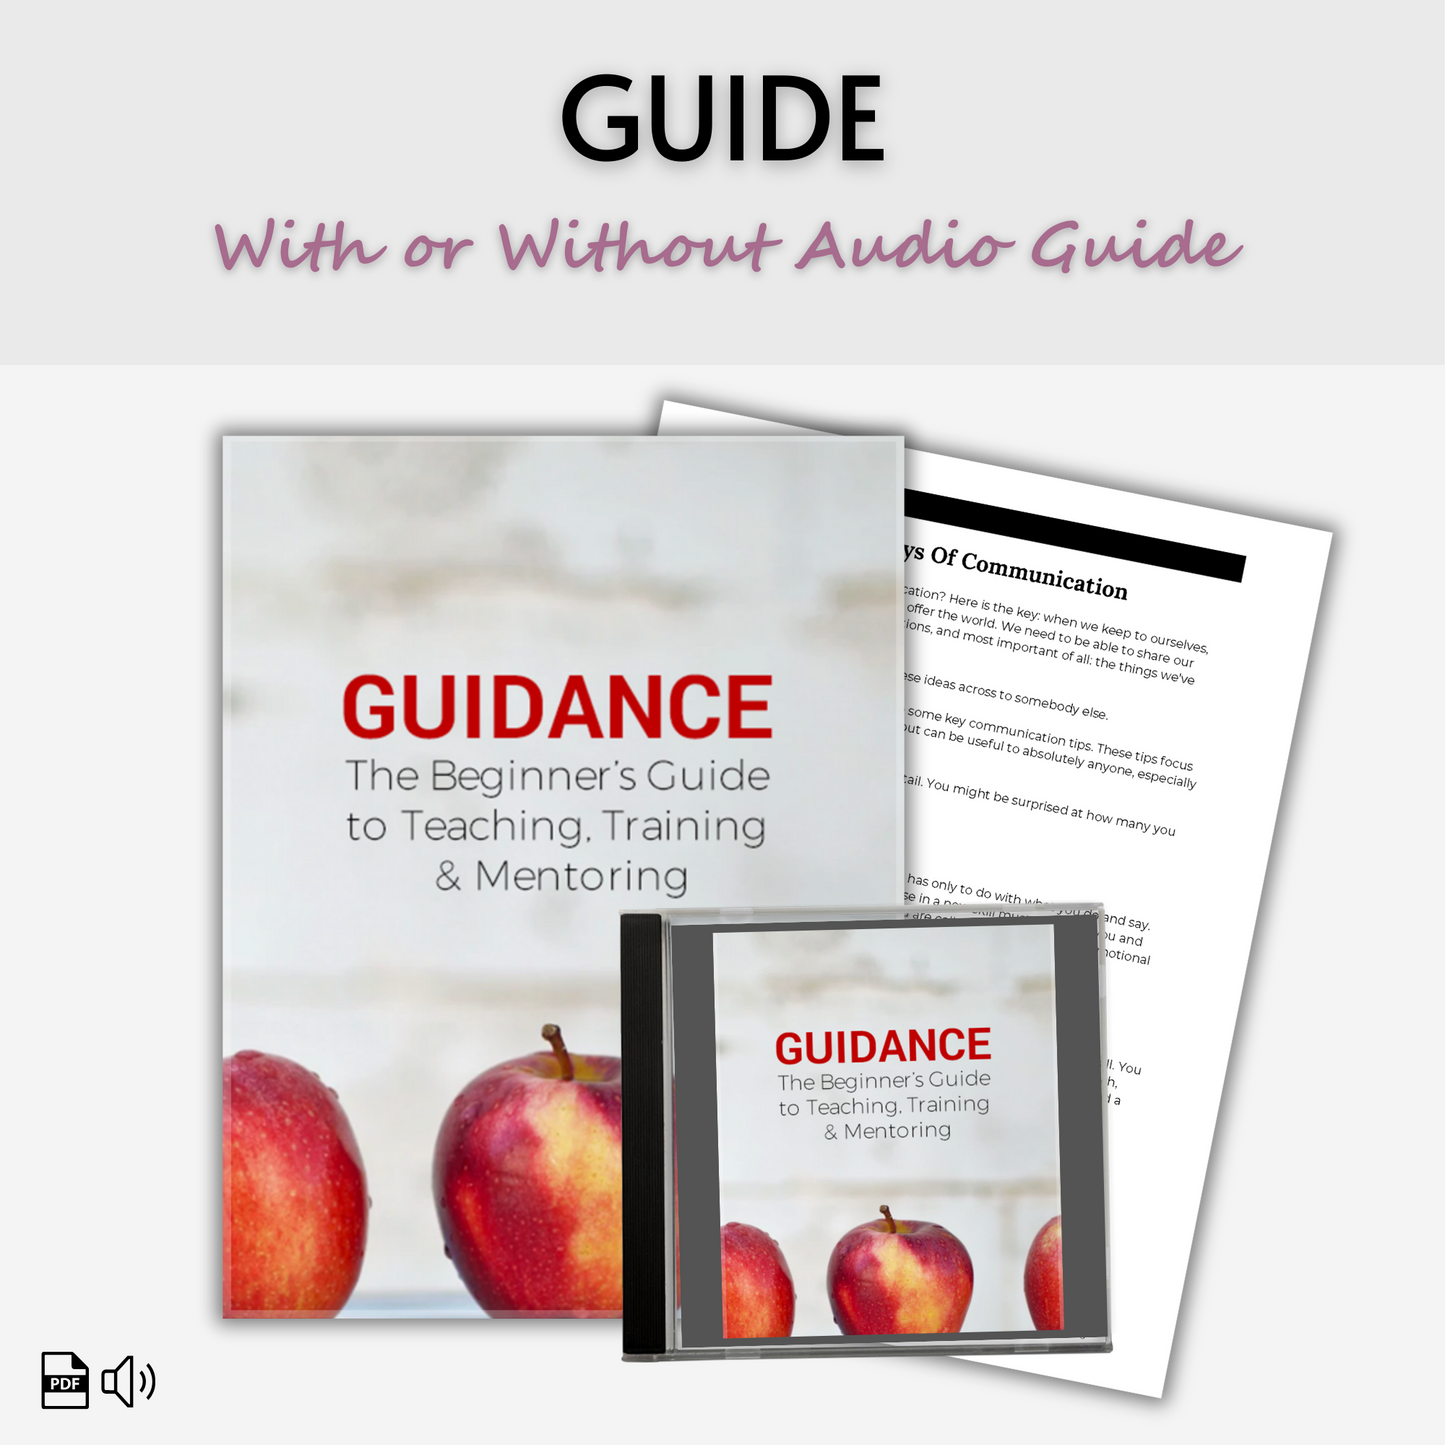 Guidance: The Beginner’s Guide to Teaching, Training & Mentoring